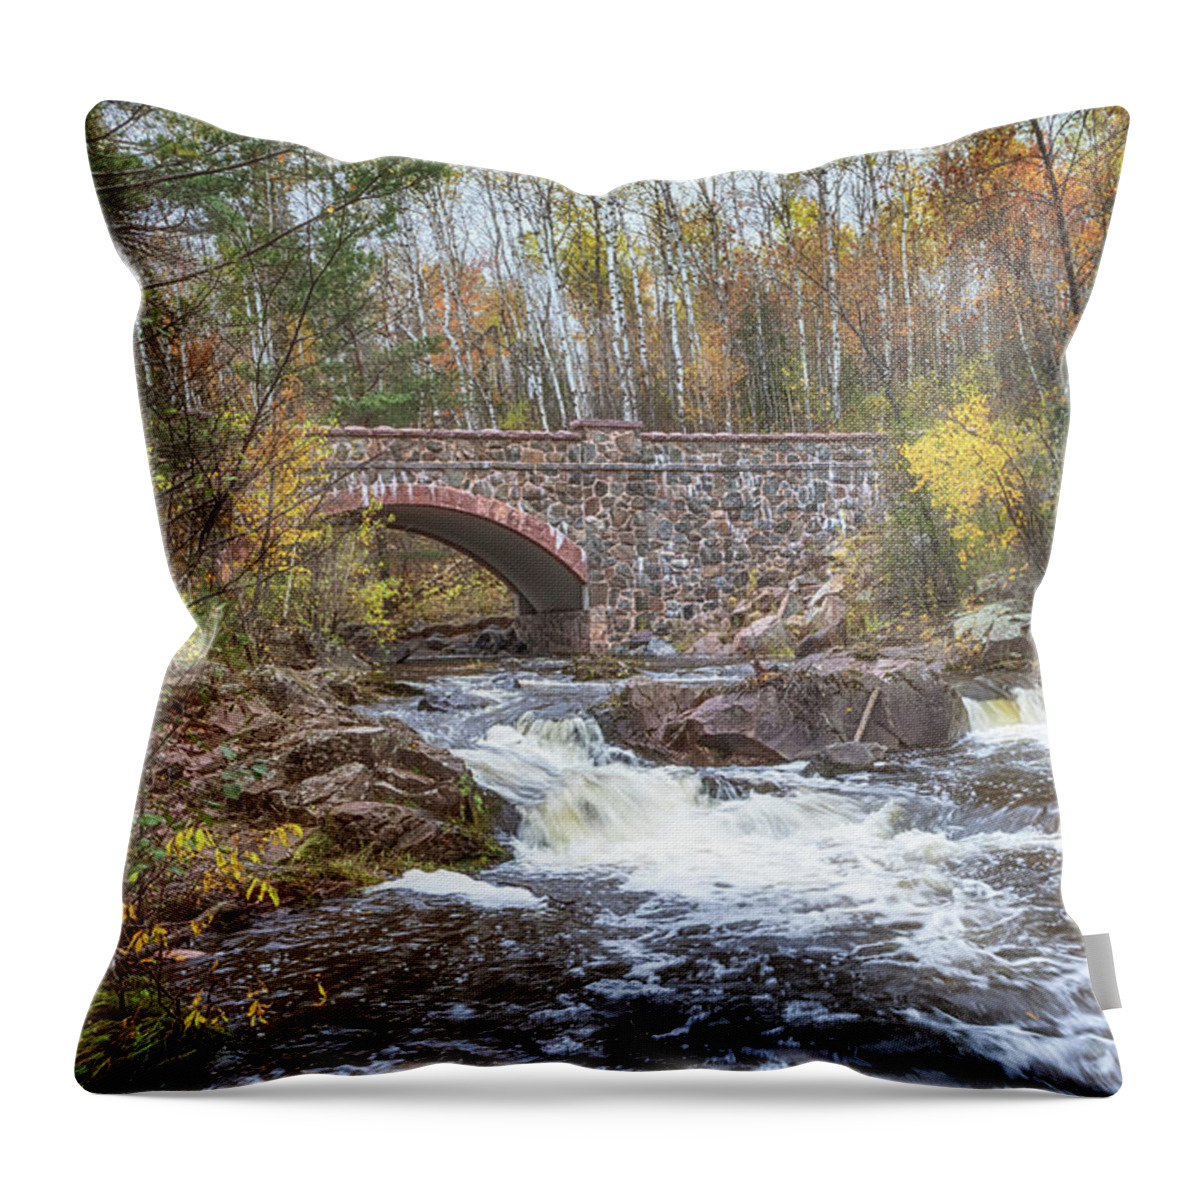 Bridge Throw Pillow featuring the photograph Bridge 7 on Seven Bridges Road by Susan Rissi Tregoning